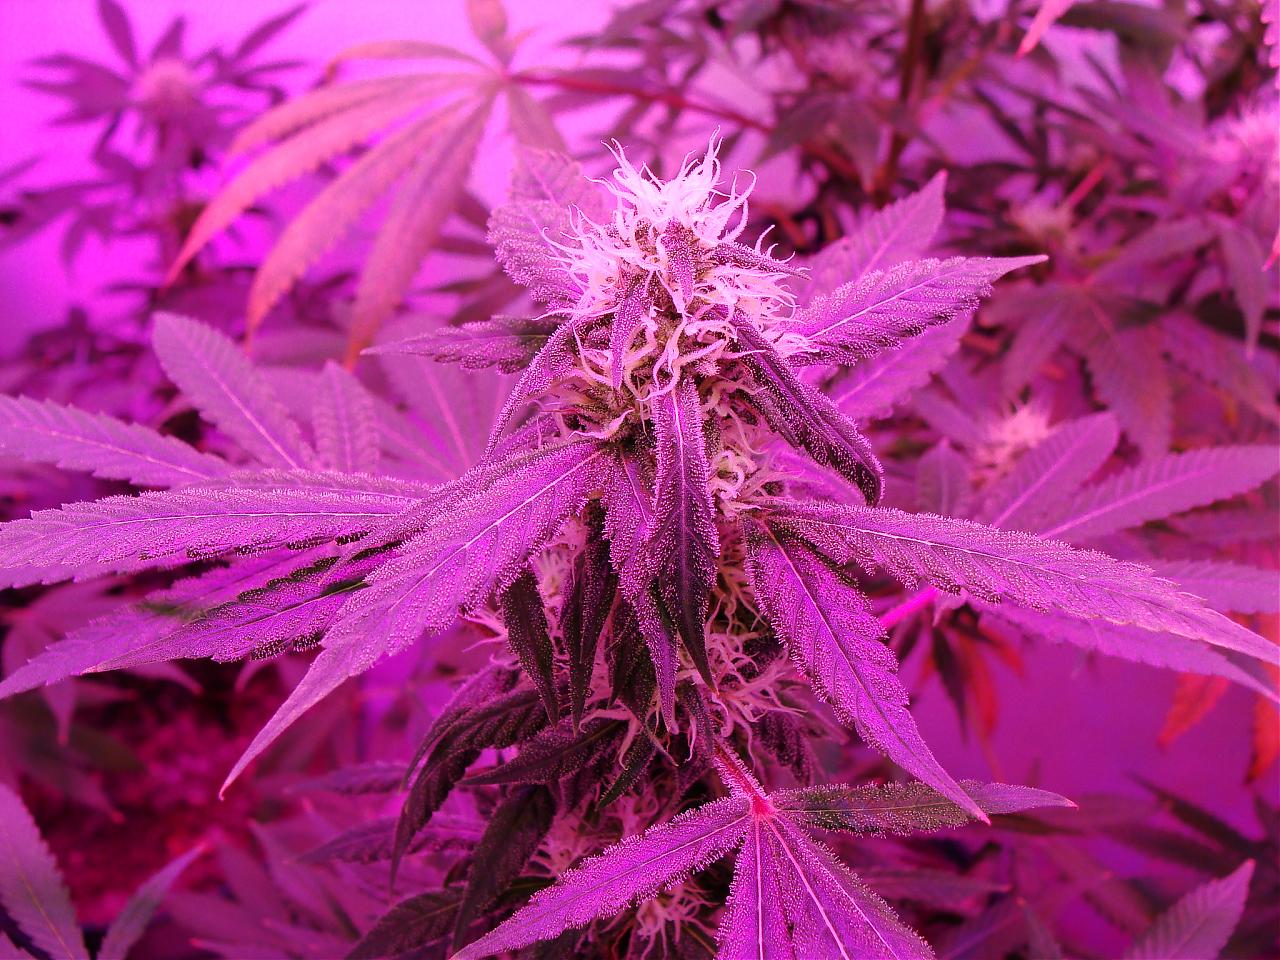 Hydroponic Marijuana Nutrients Botanicares Cal Mag Plus